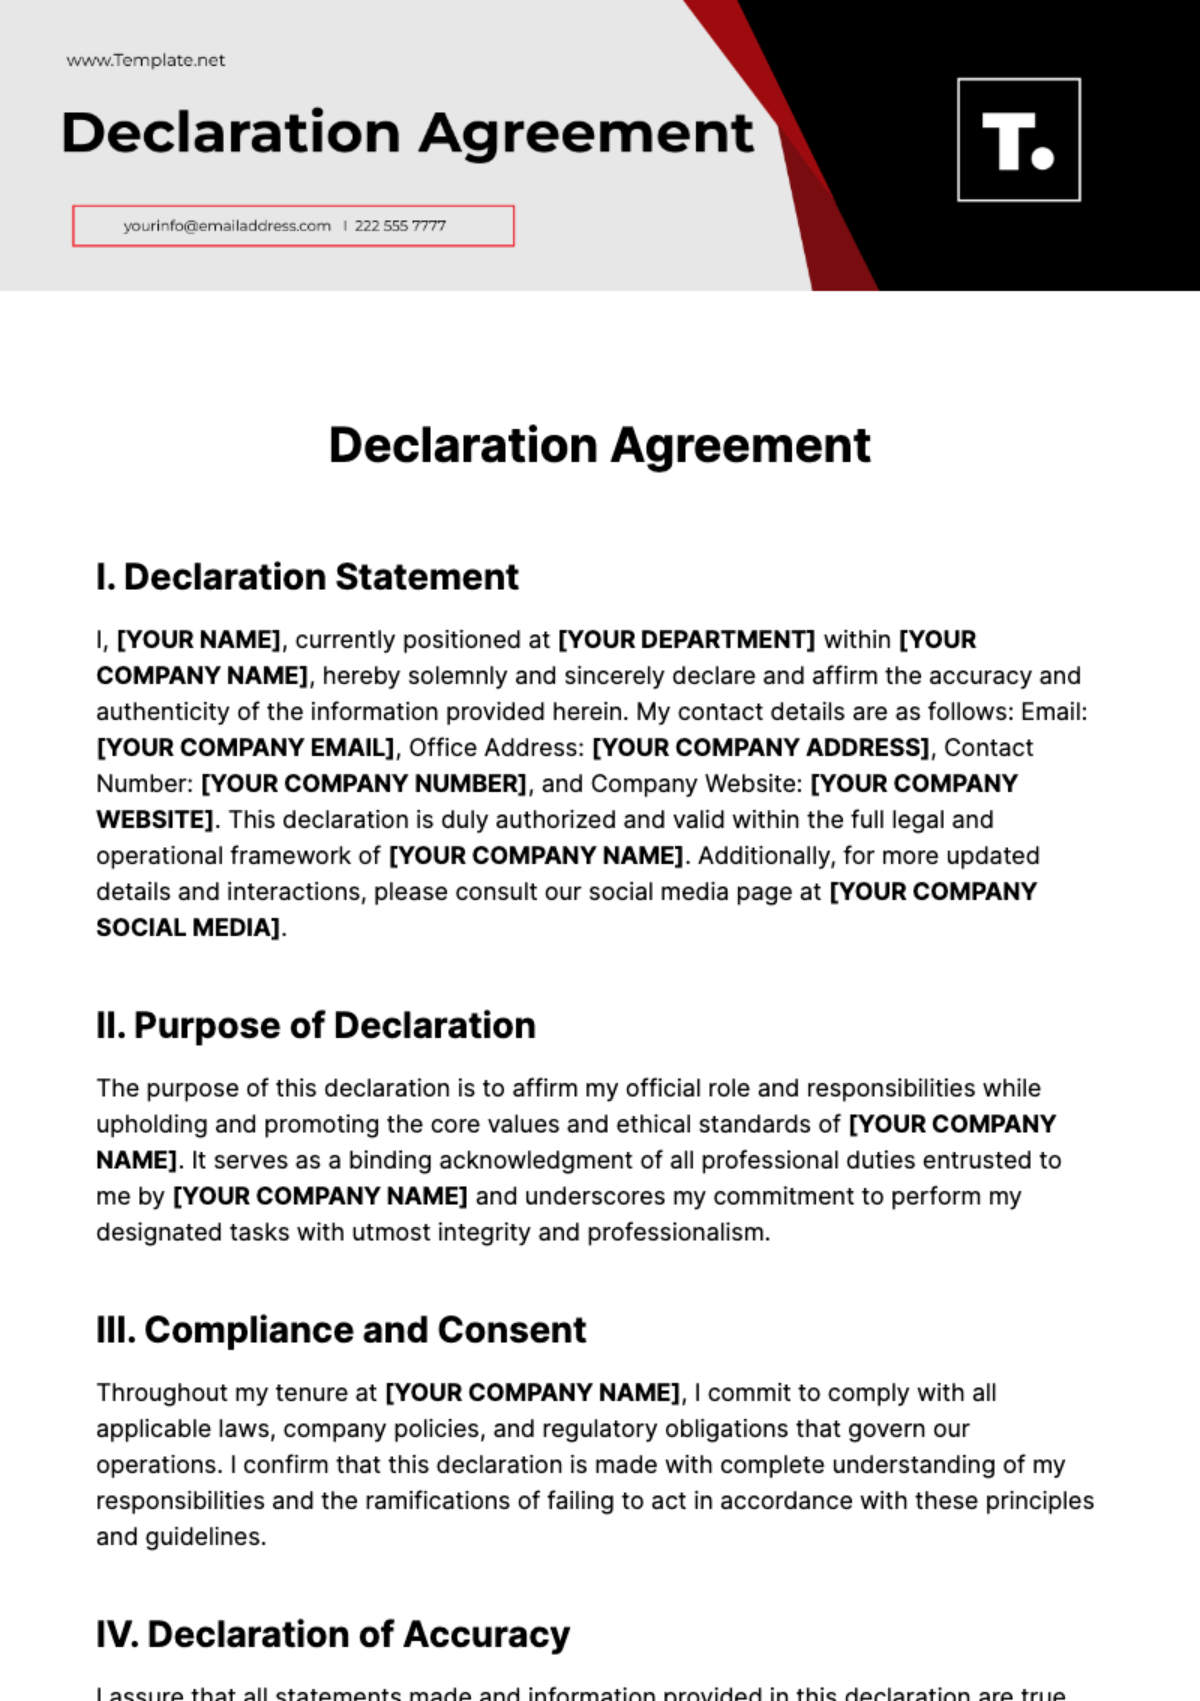 Declaration Agreement Template